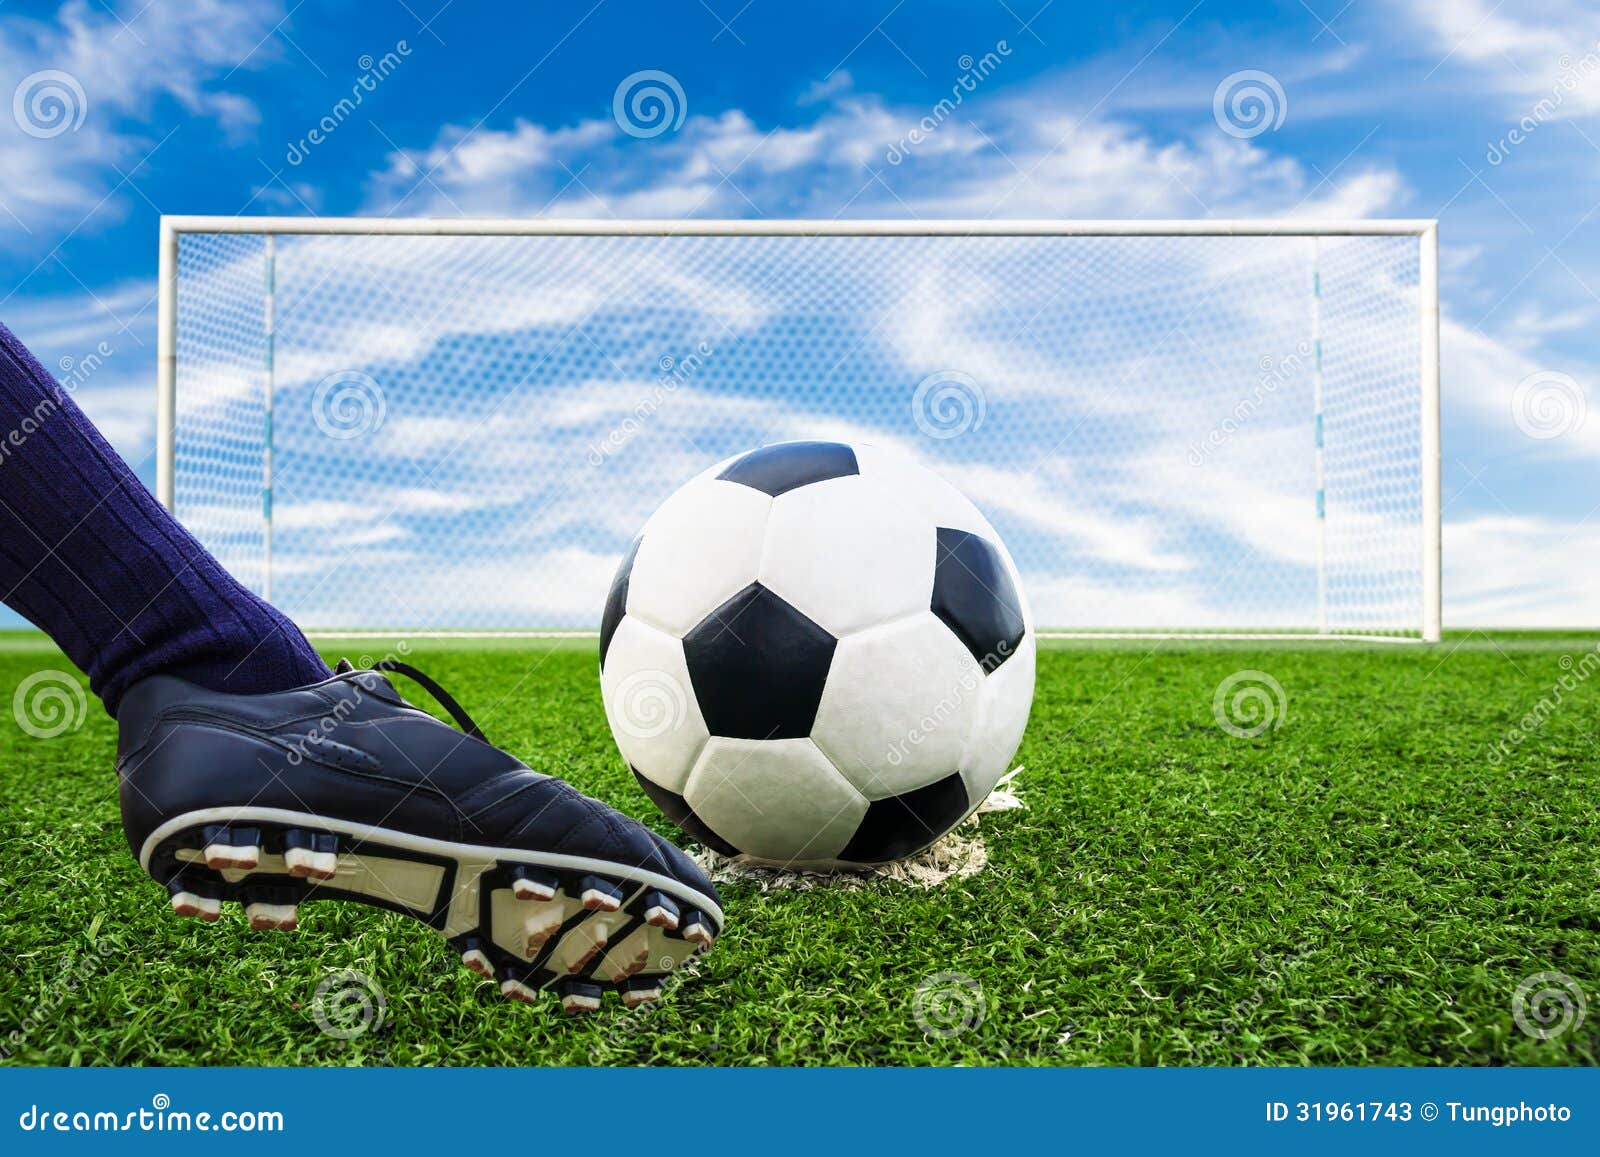 Foot Kicking Soccer Ball Stock Image Image Of Grass 31961743